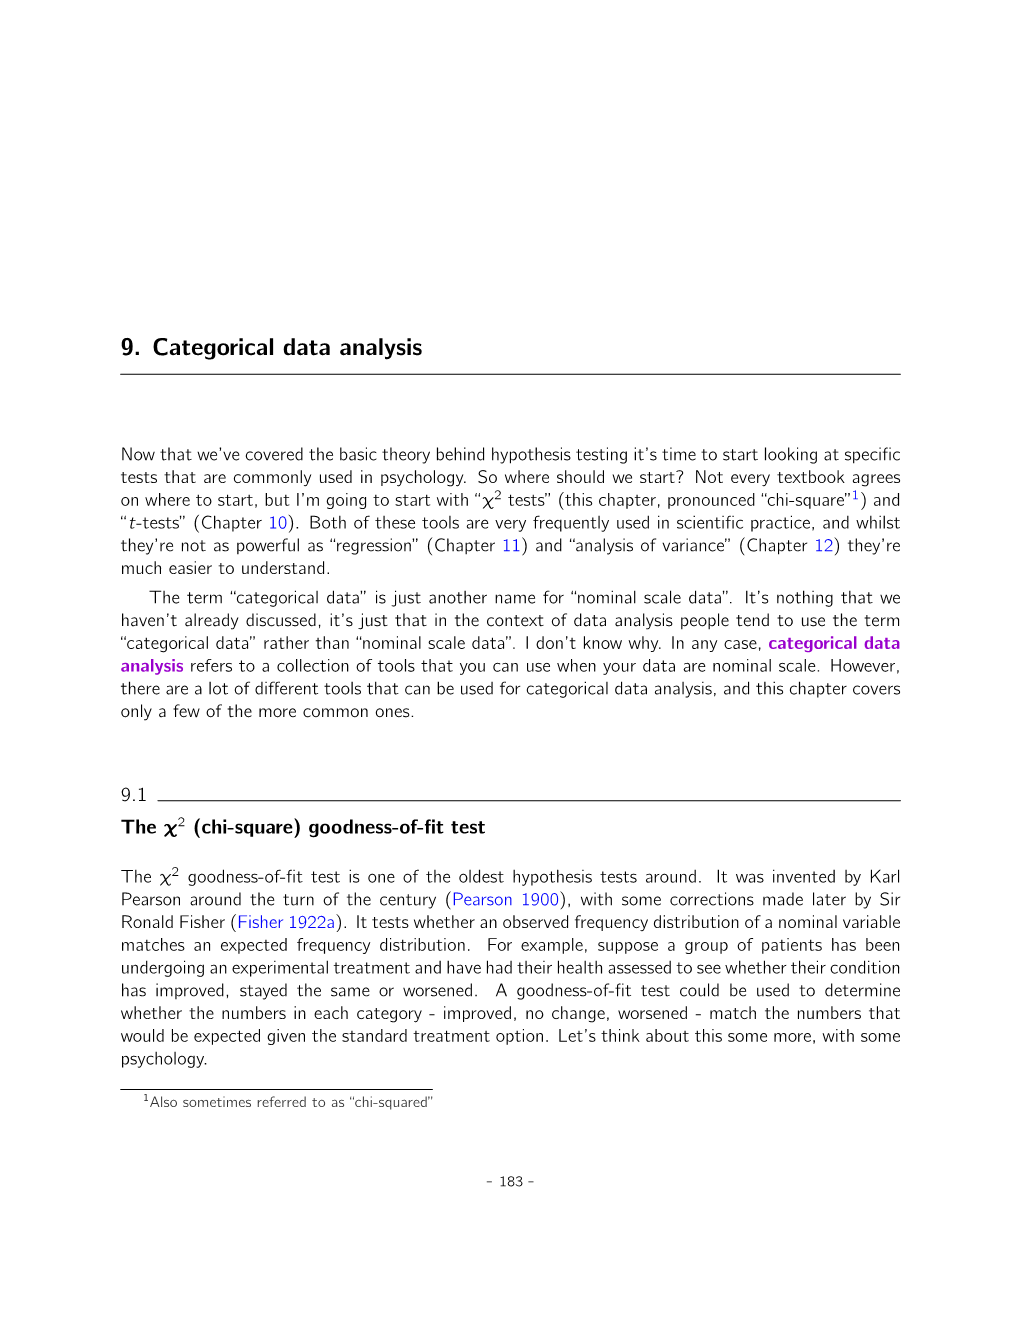 9. Categorical Data Analysis